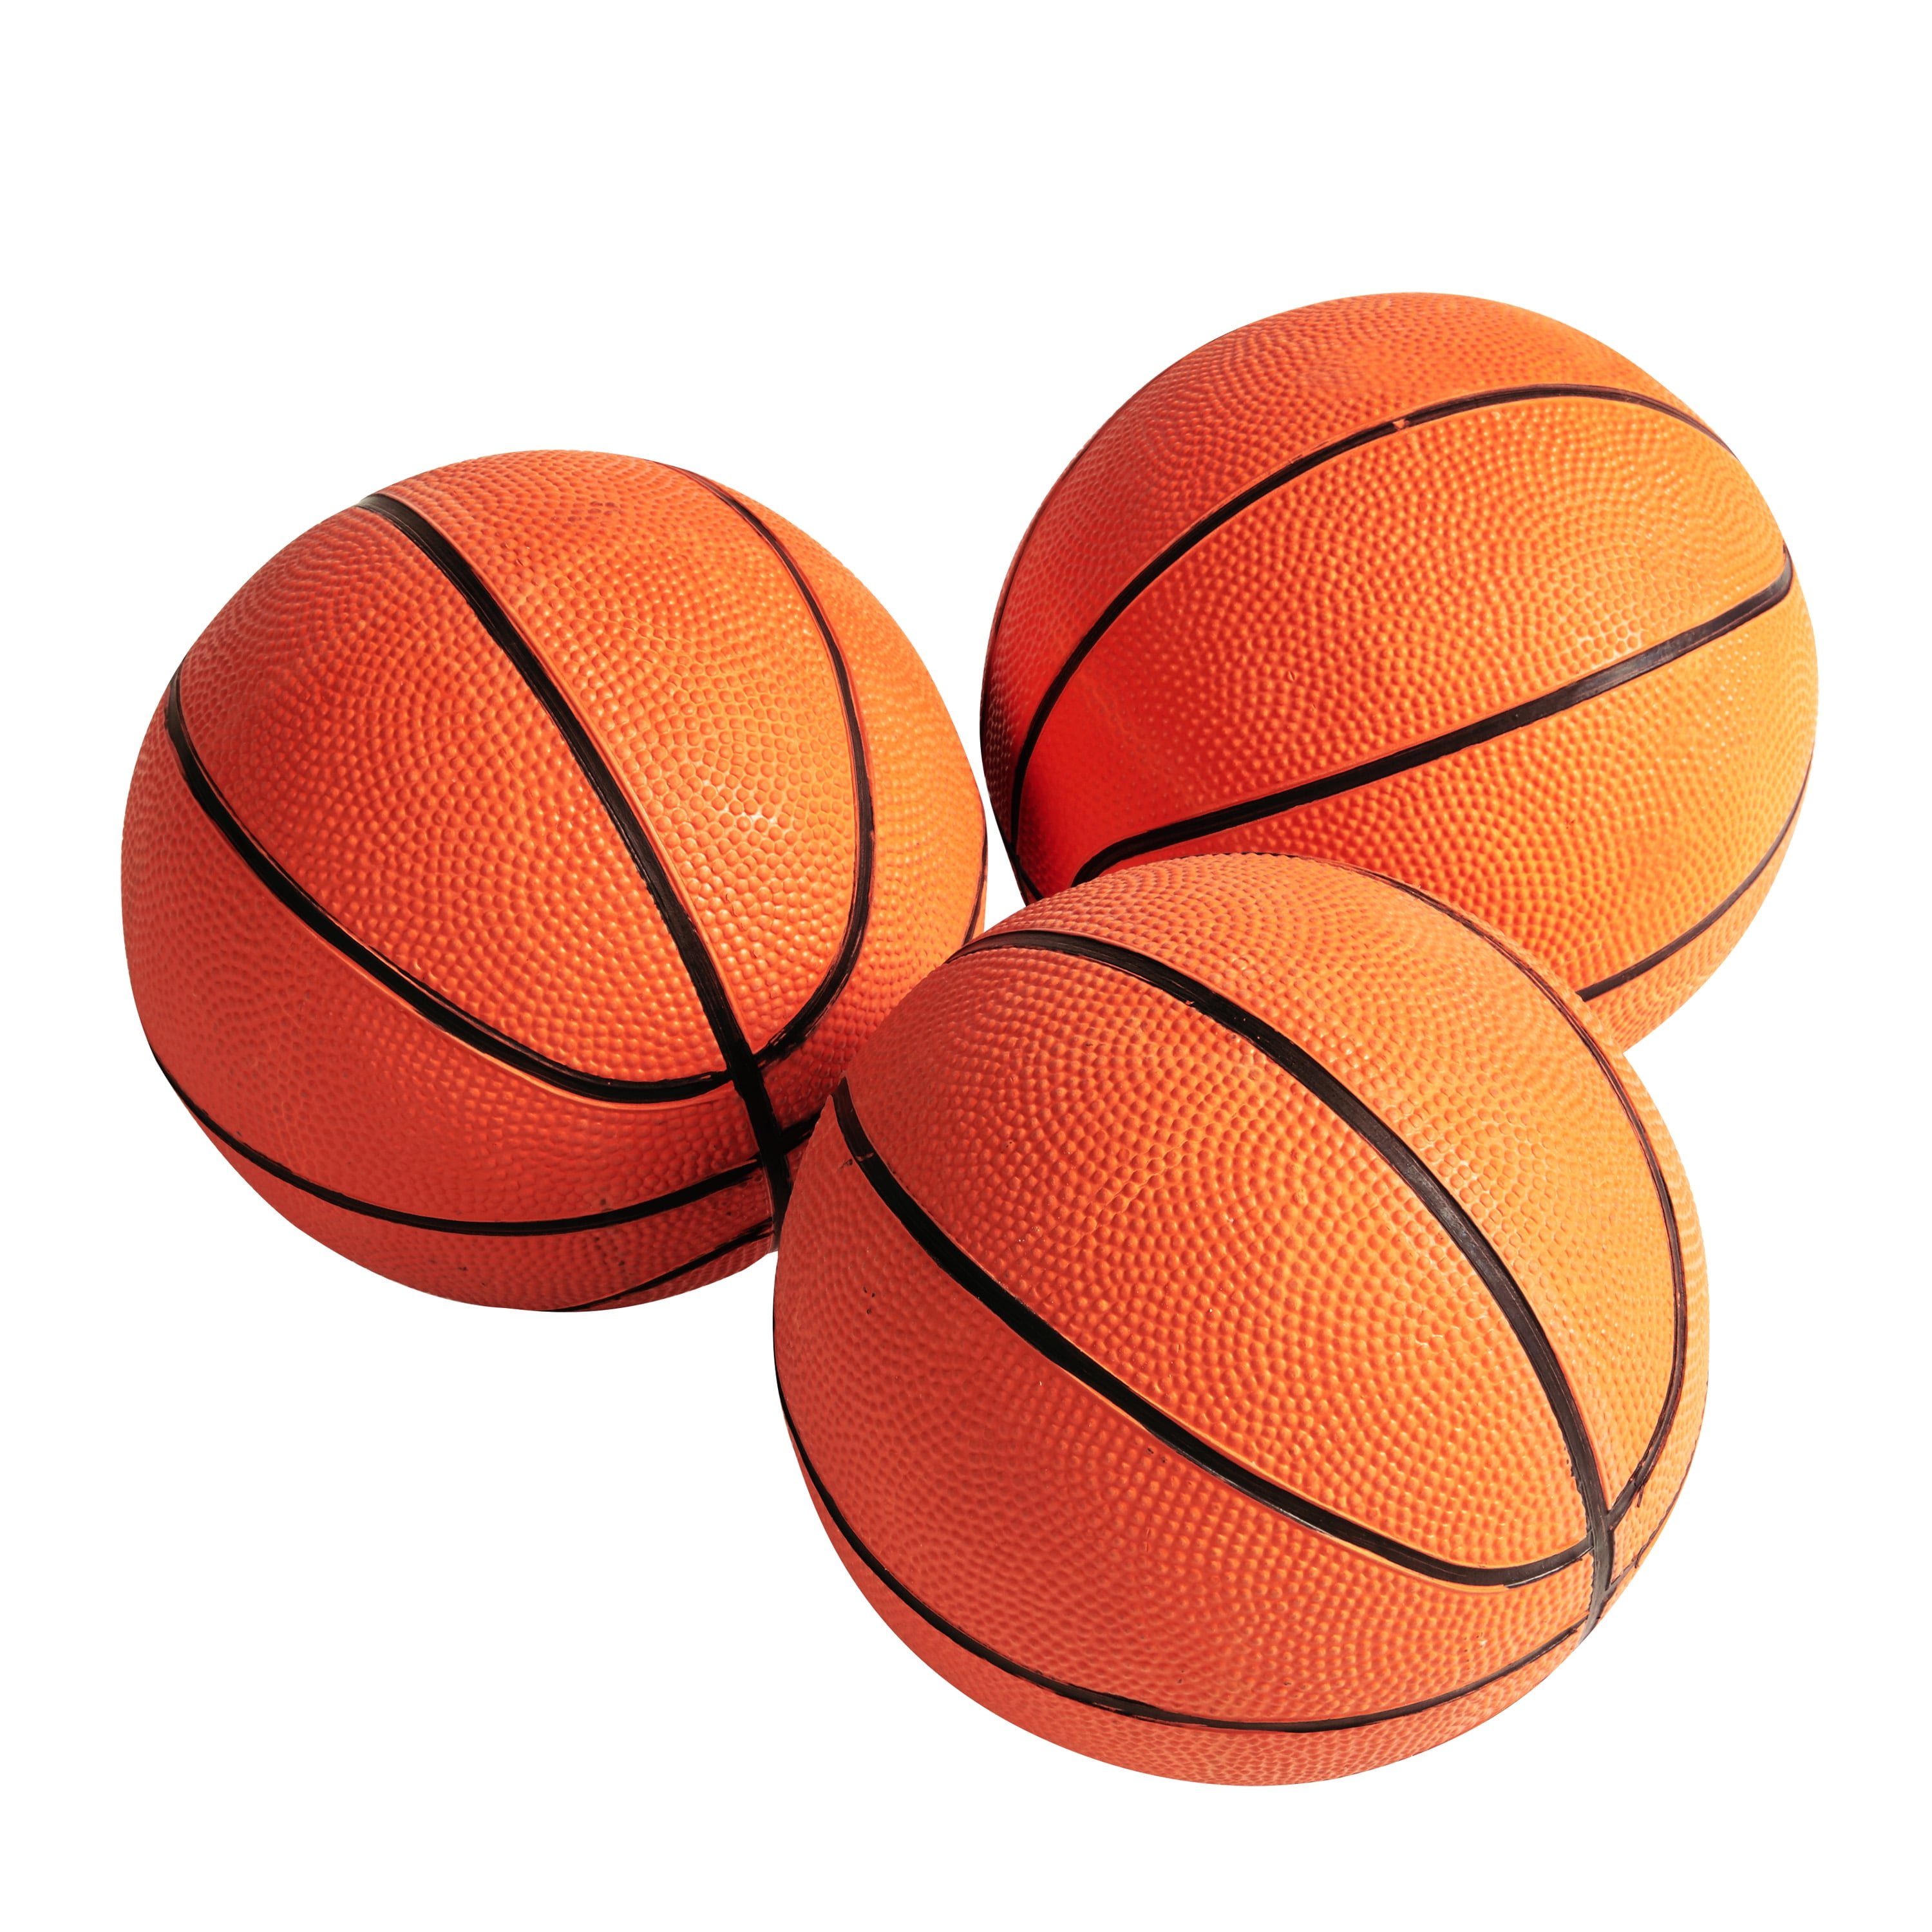 3 Packs 7 Inch Mini Inflatable Basketballs Plastic Replacement Basketballs 